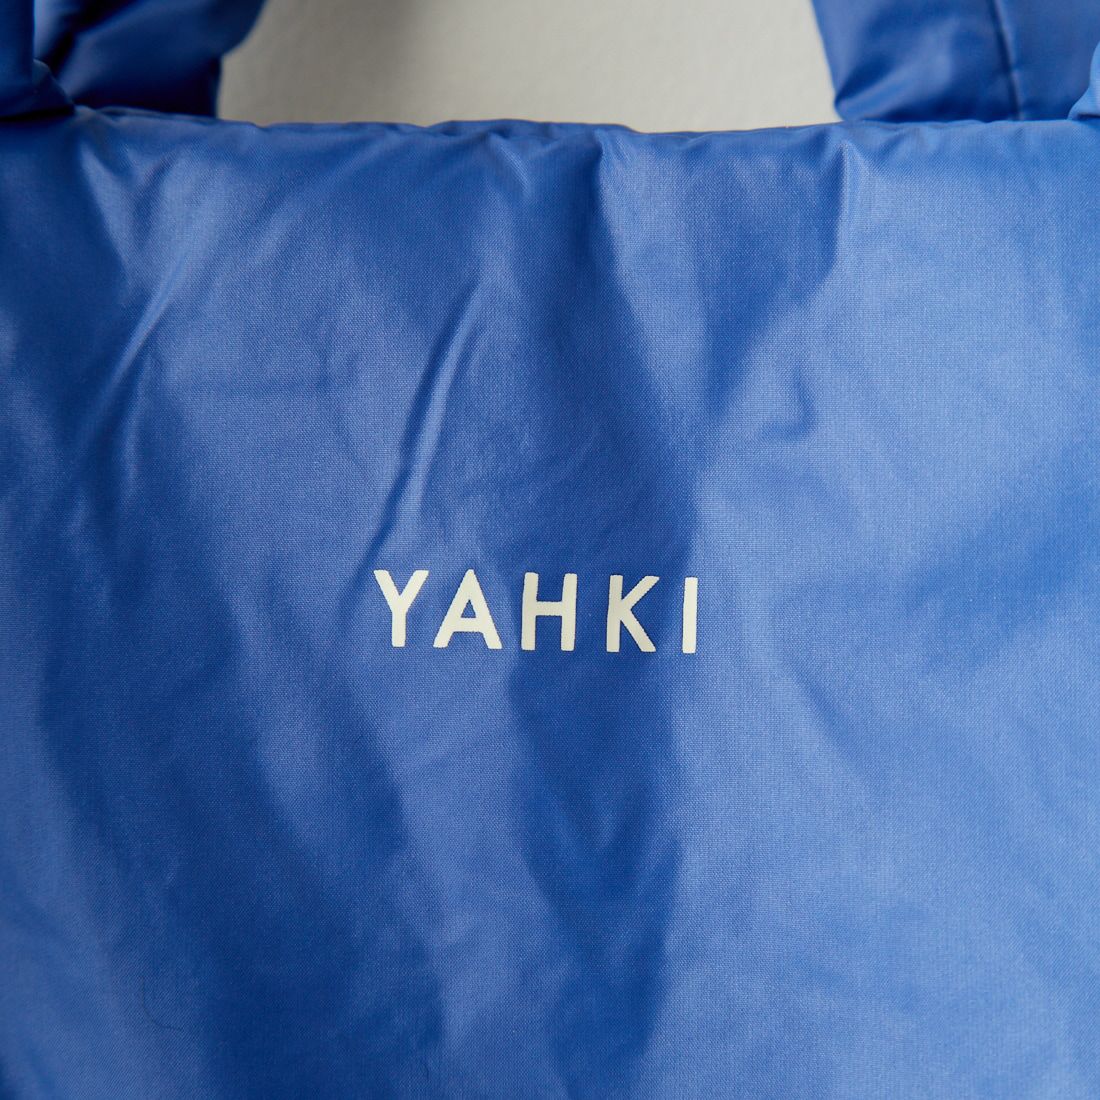 YAHKI [ヤーキ] ナイロンクロスボディバッグ [YH-648]